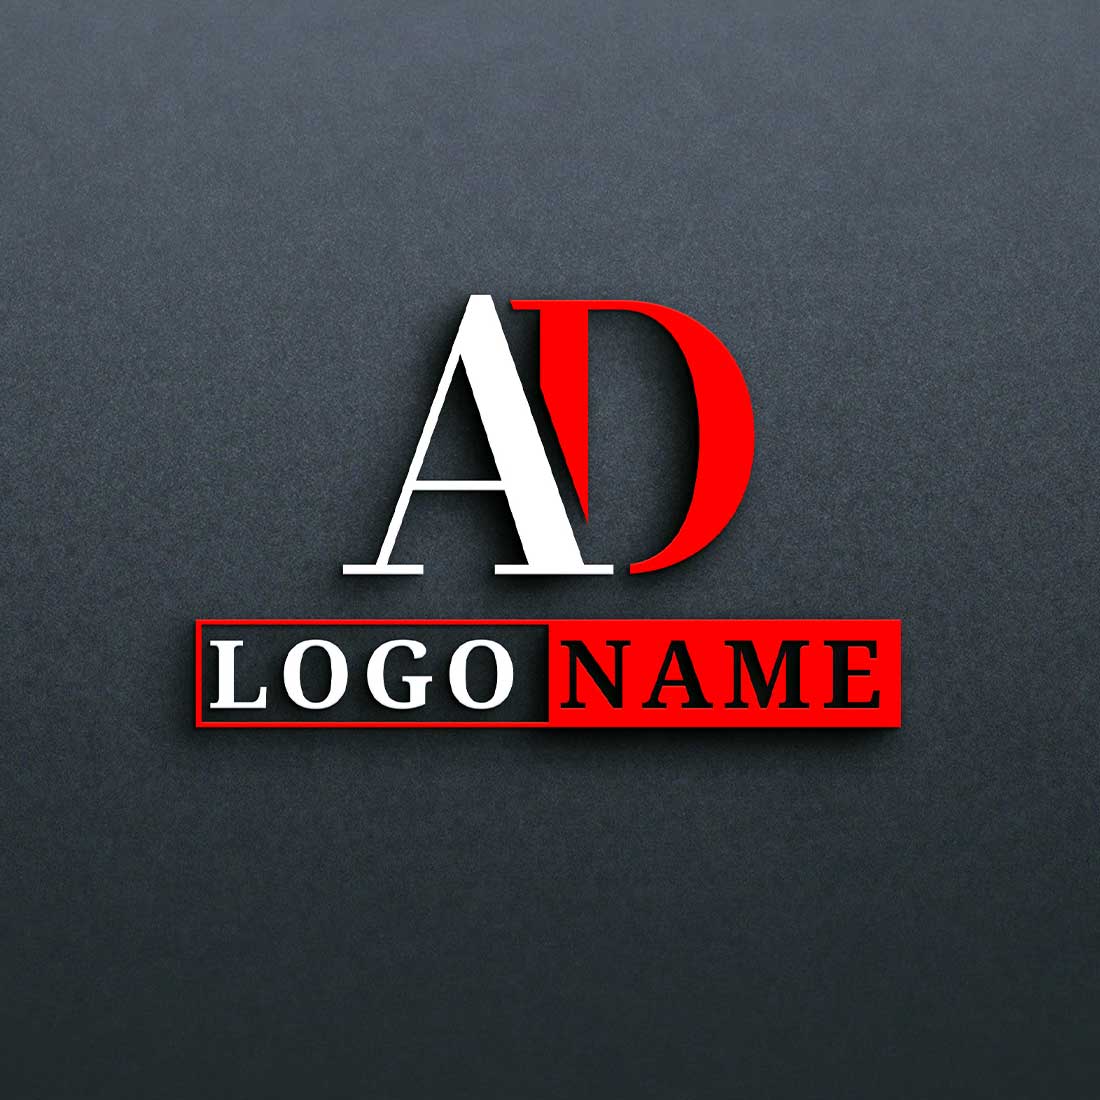 Modern (AD) Letter Logo Design in Illustrator - 100% Editable preview image.